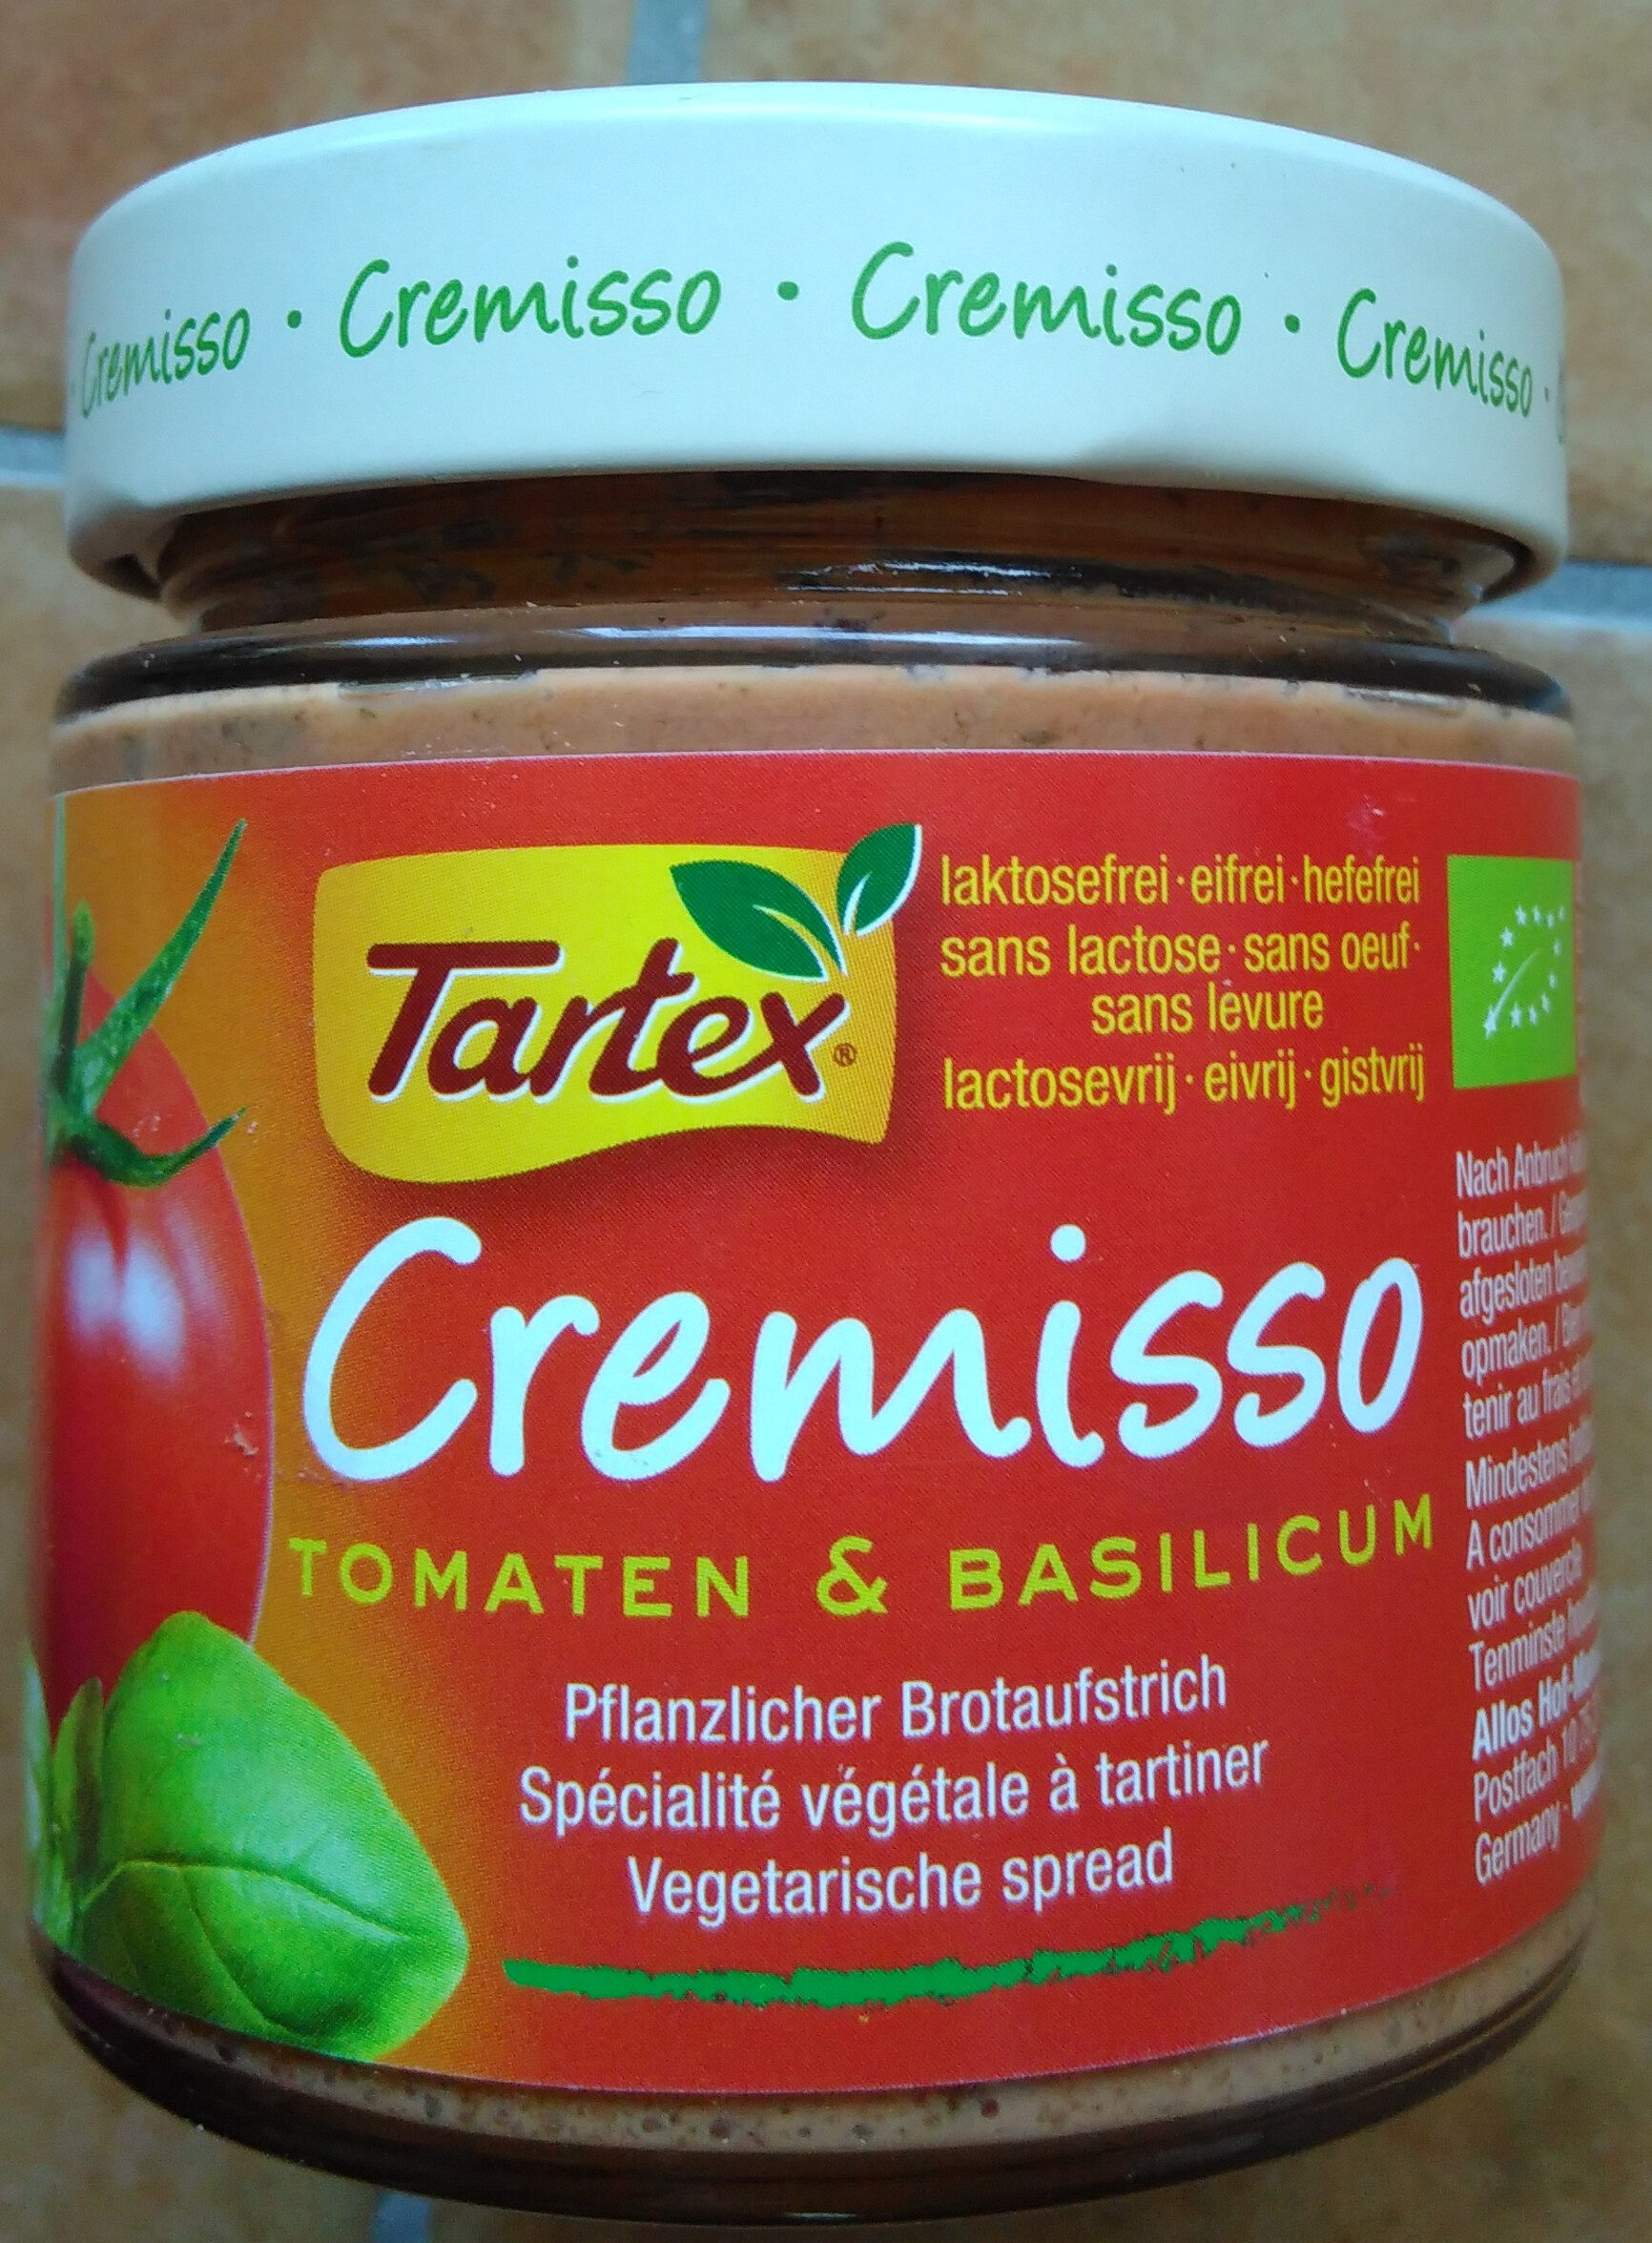 Cremisso Tomaten&Basilicum - Product - fr